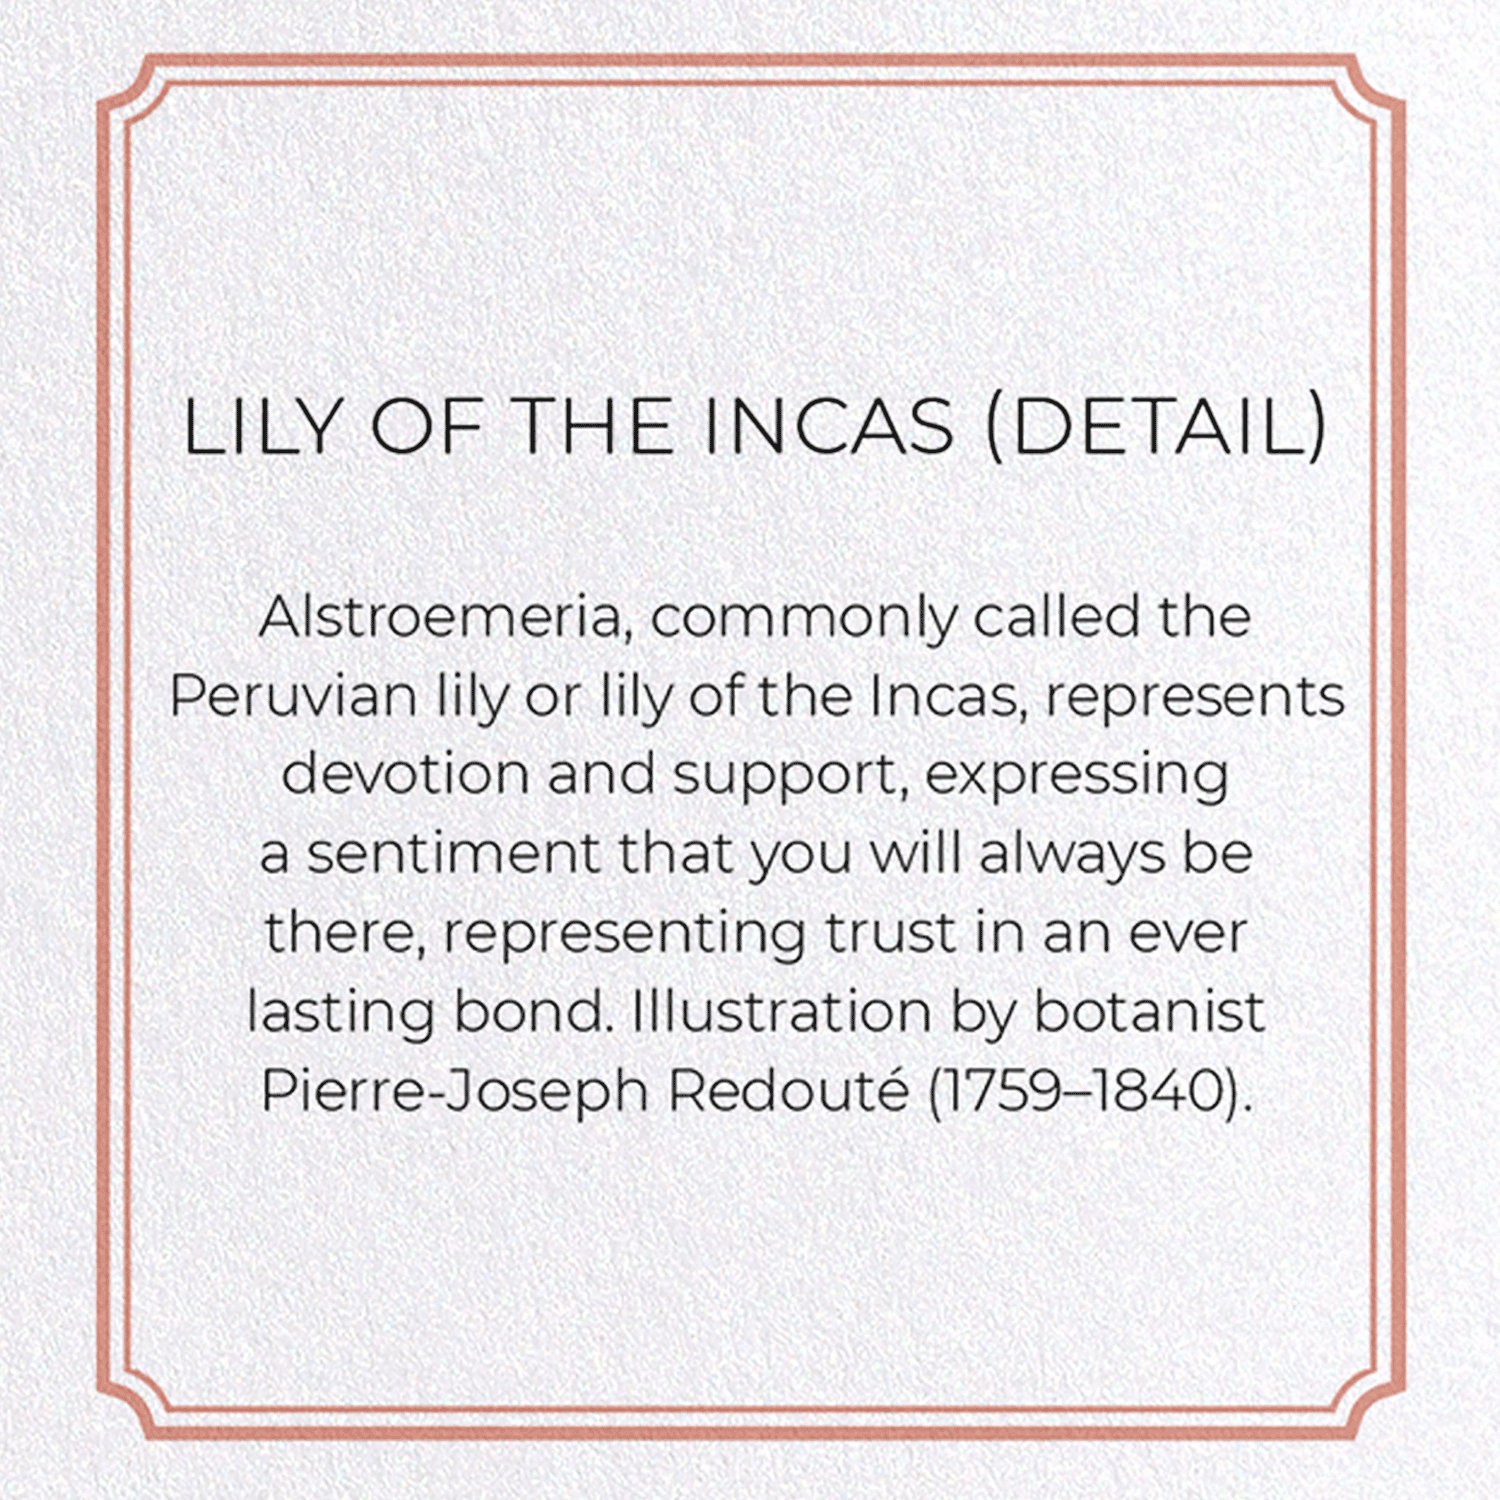 LILY OF THE INCAS